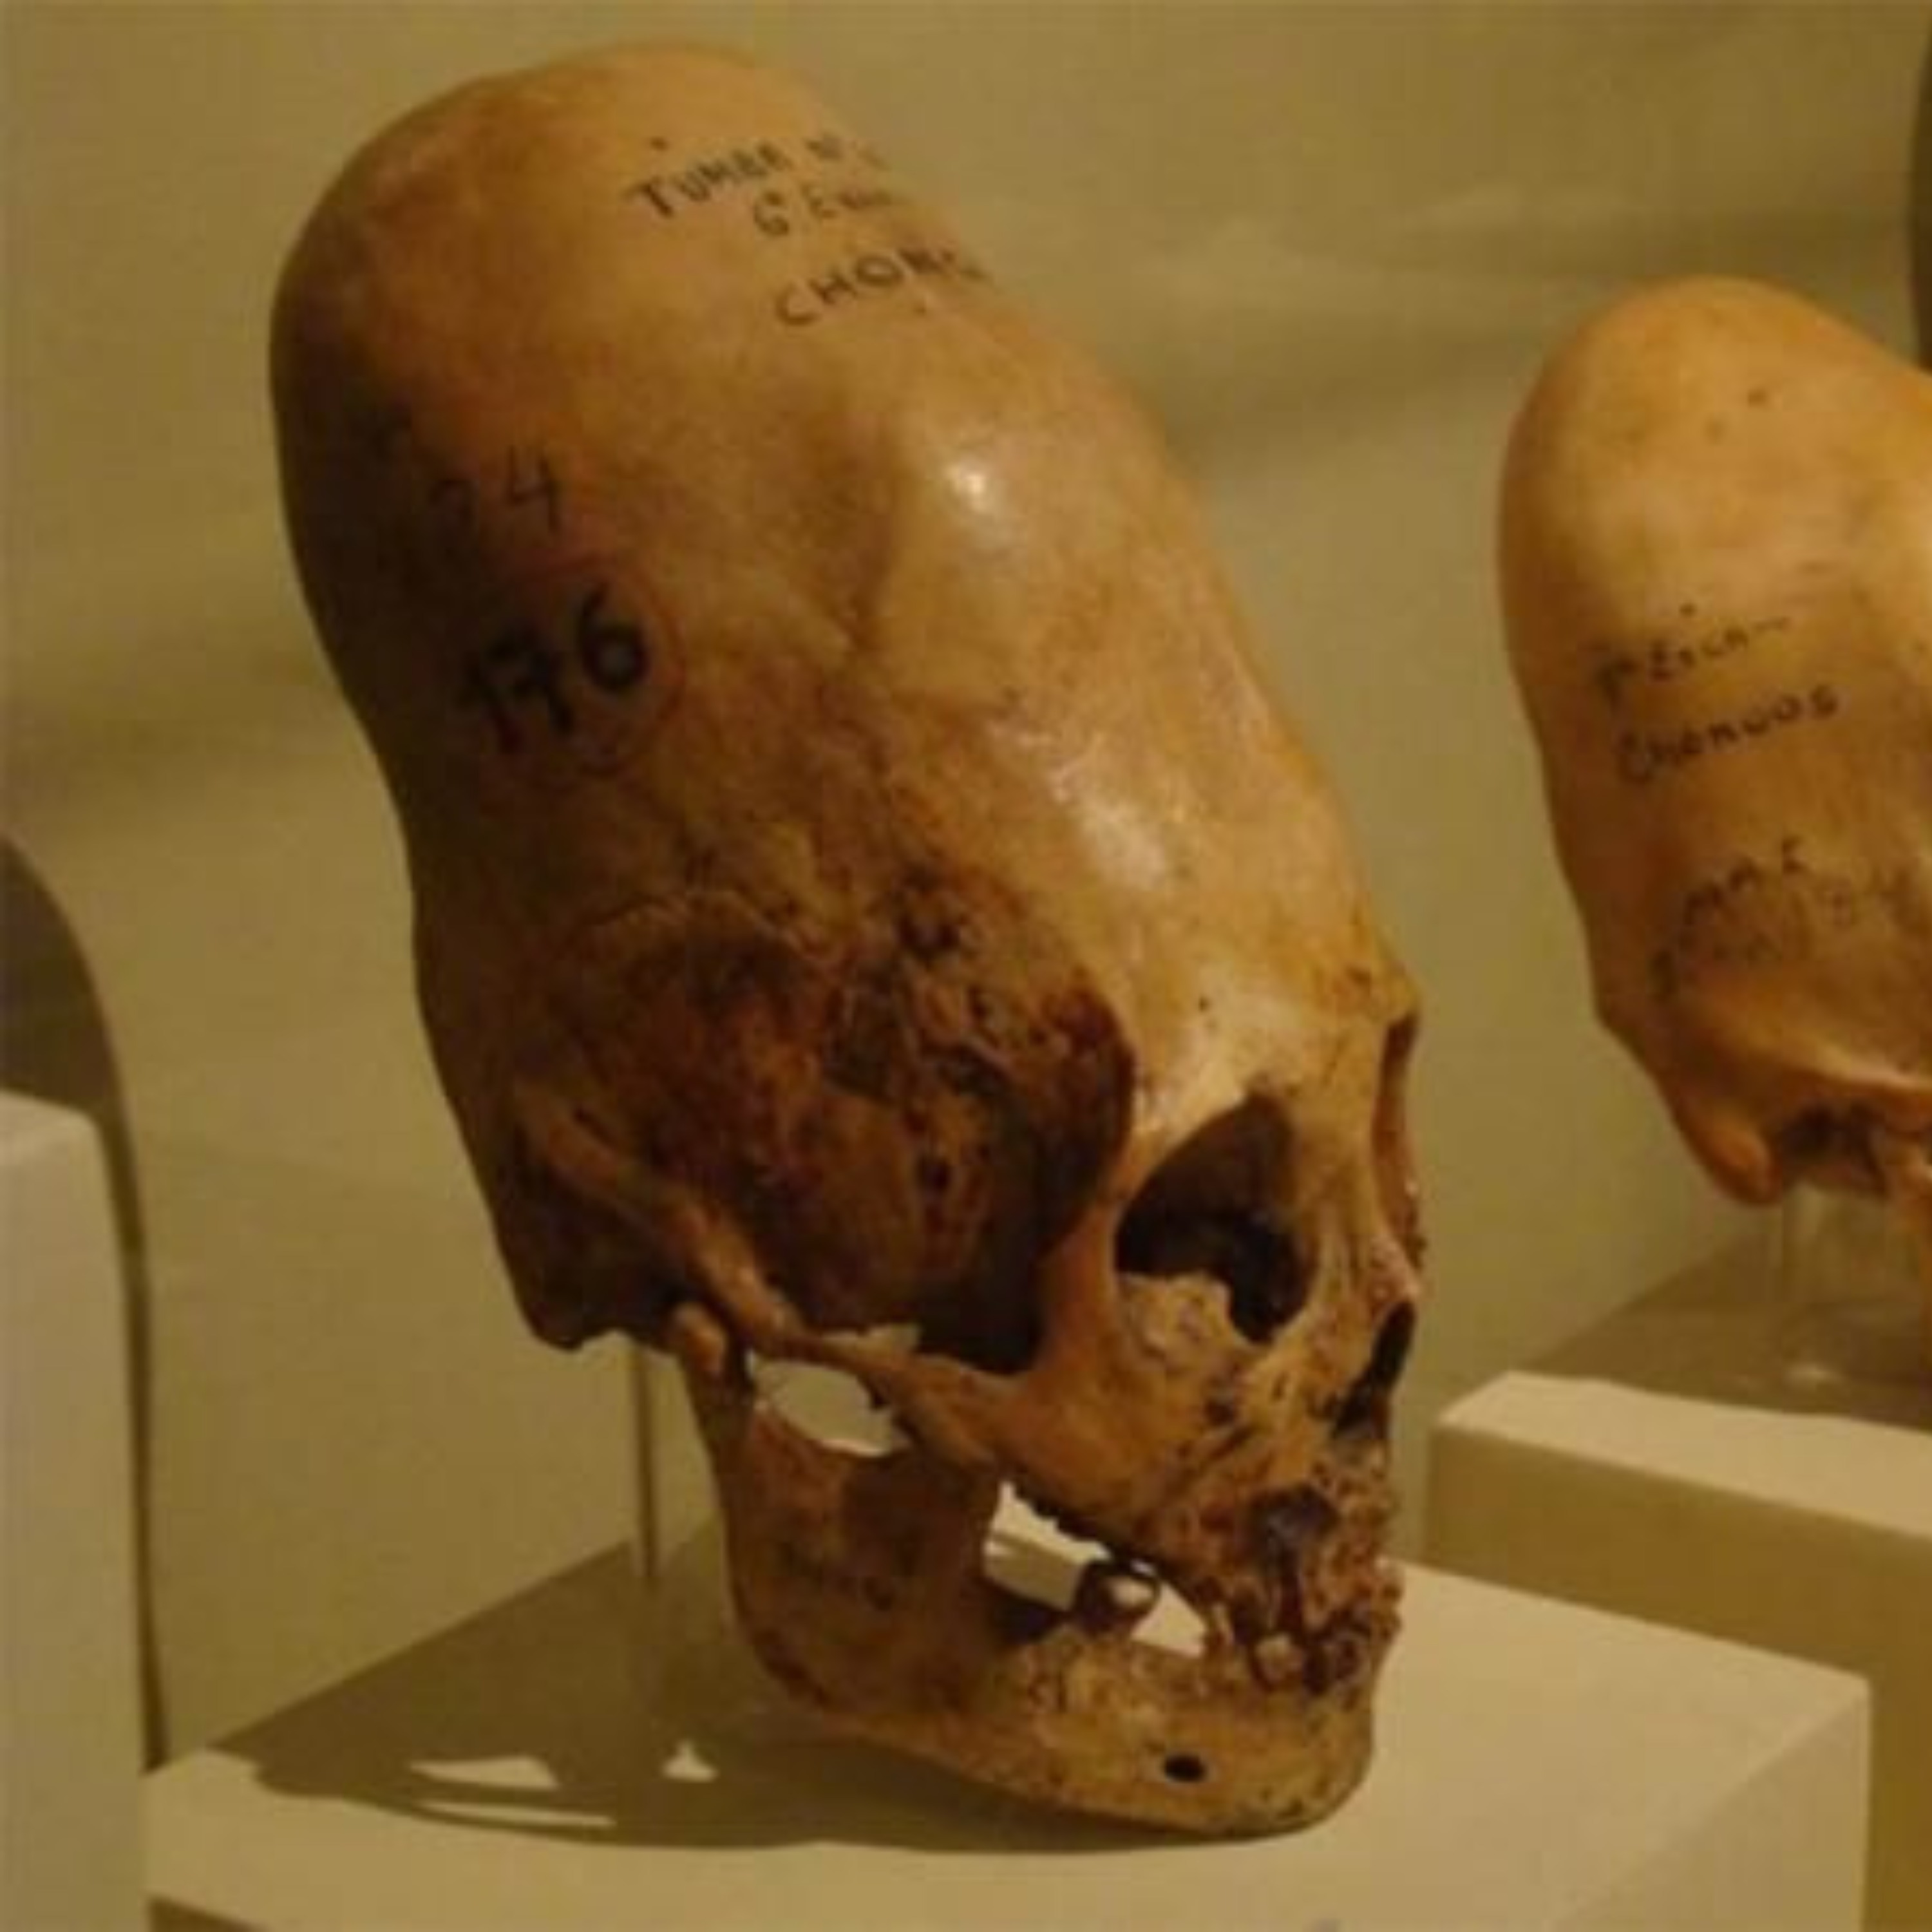 Elongated Skulls: Human or Alien?